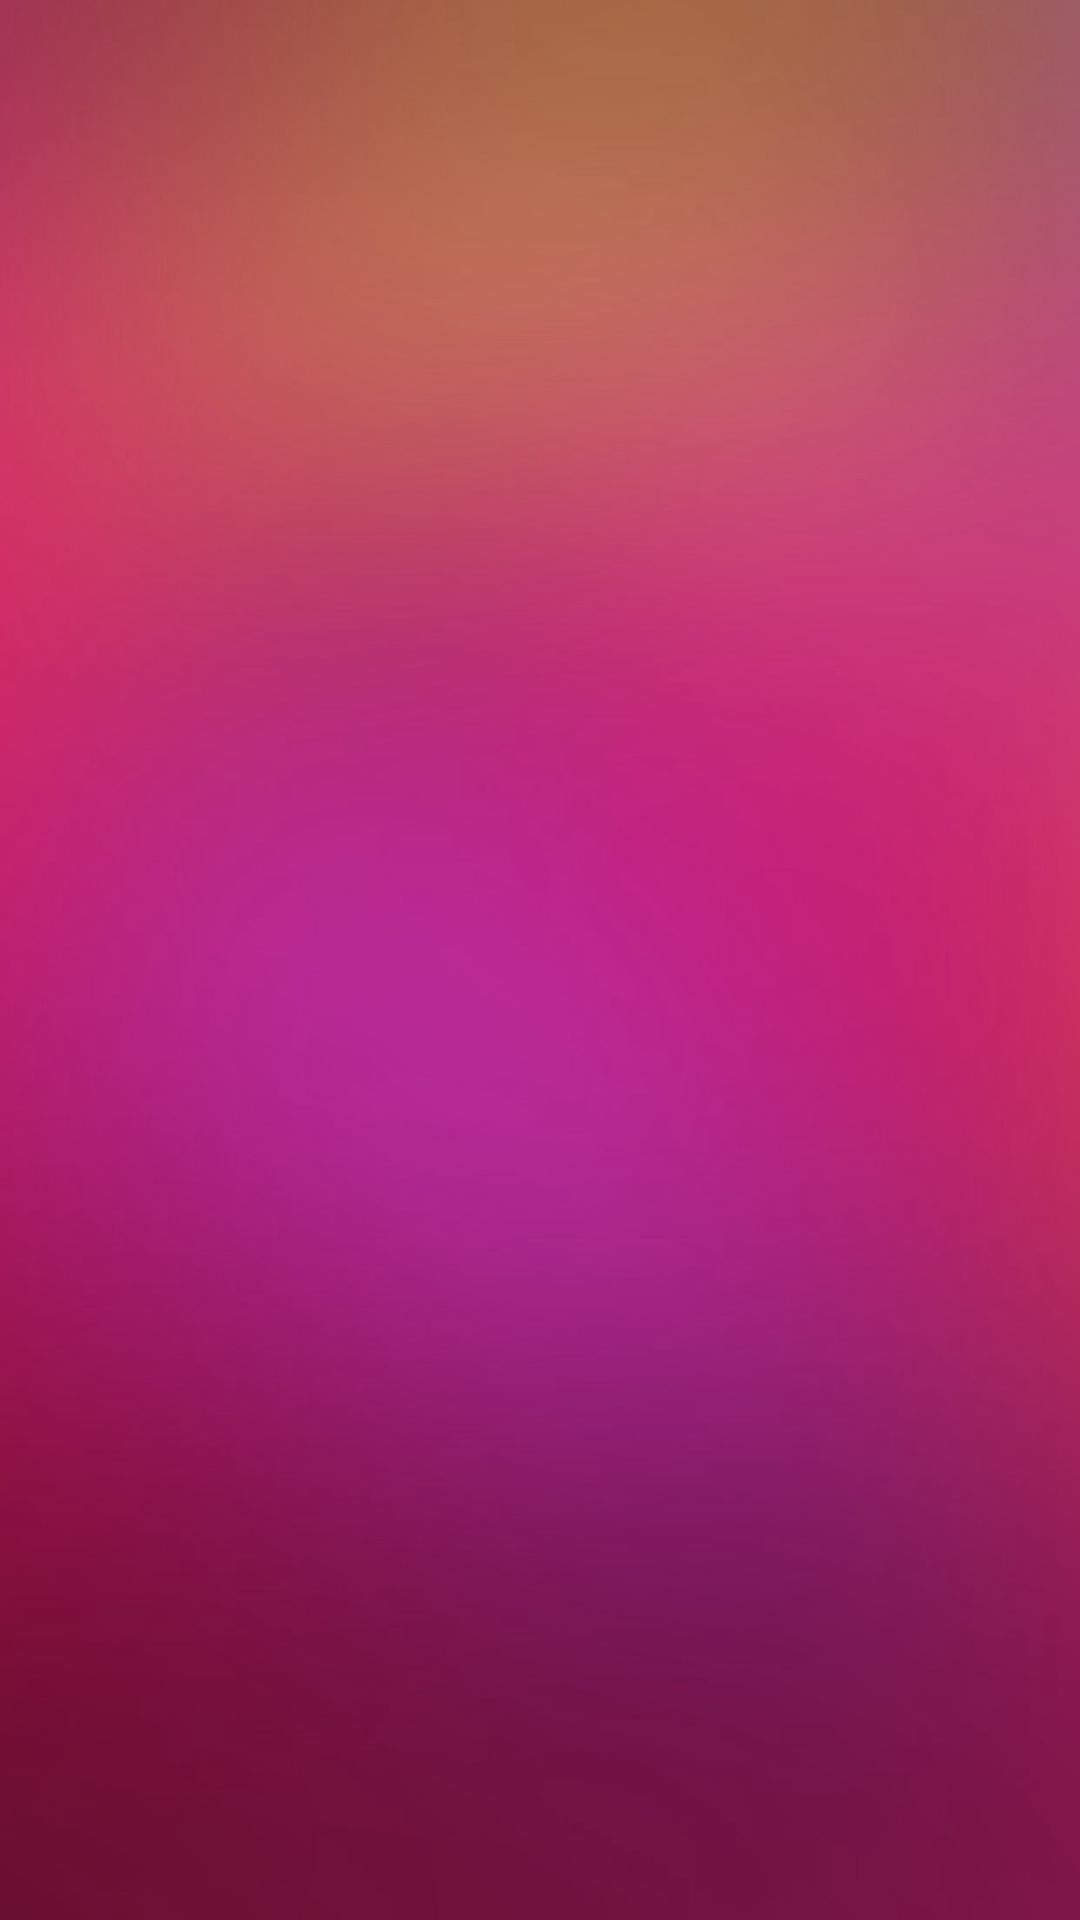 Hot Pink Red Gradation Blur Iphone 7 Wallpaper Download - Hot Pink Screen Saver - HD Wallpaper 